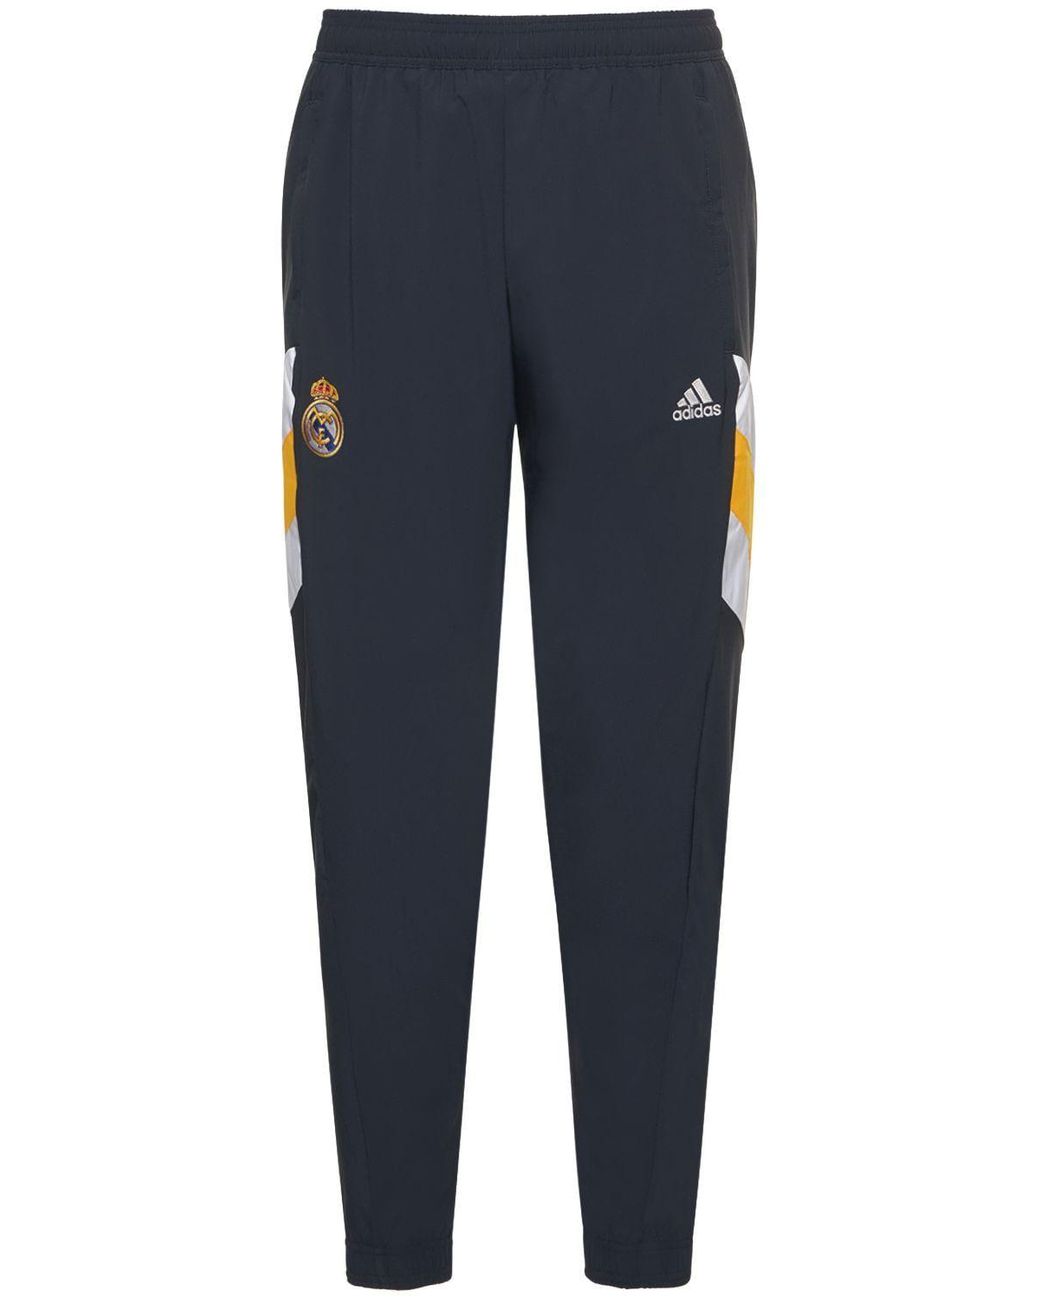 Real Madrid adidas Training Pants | Sportchek